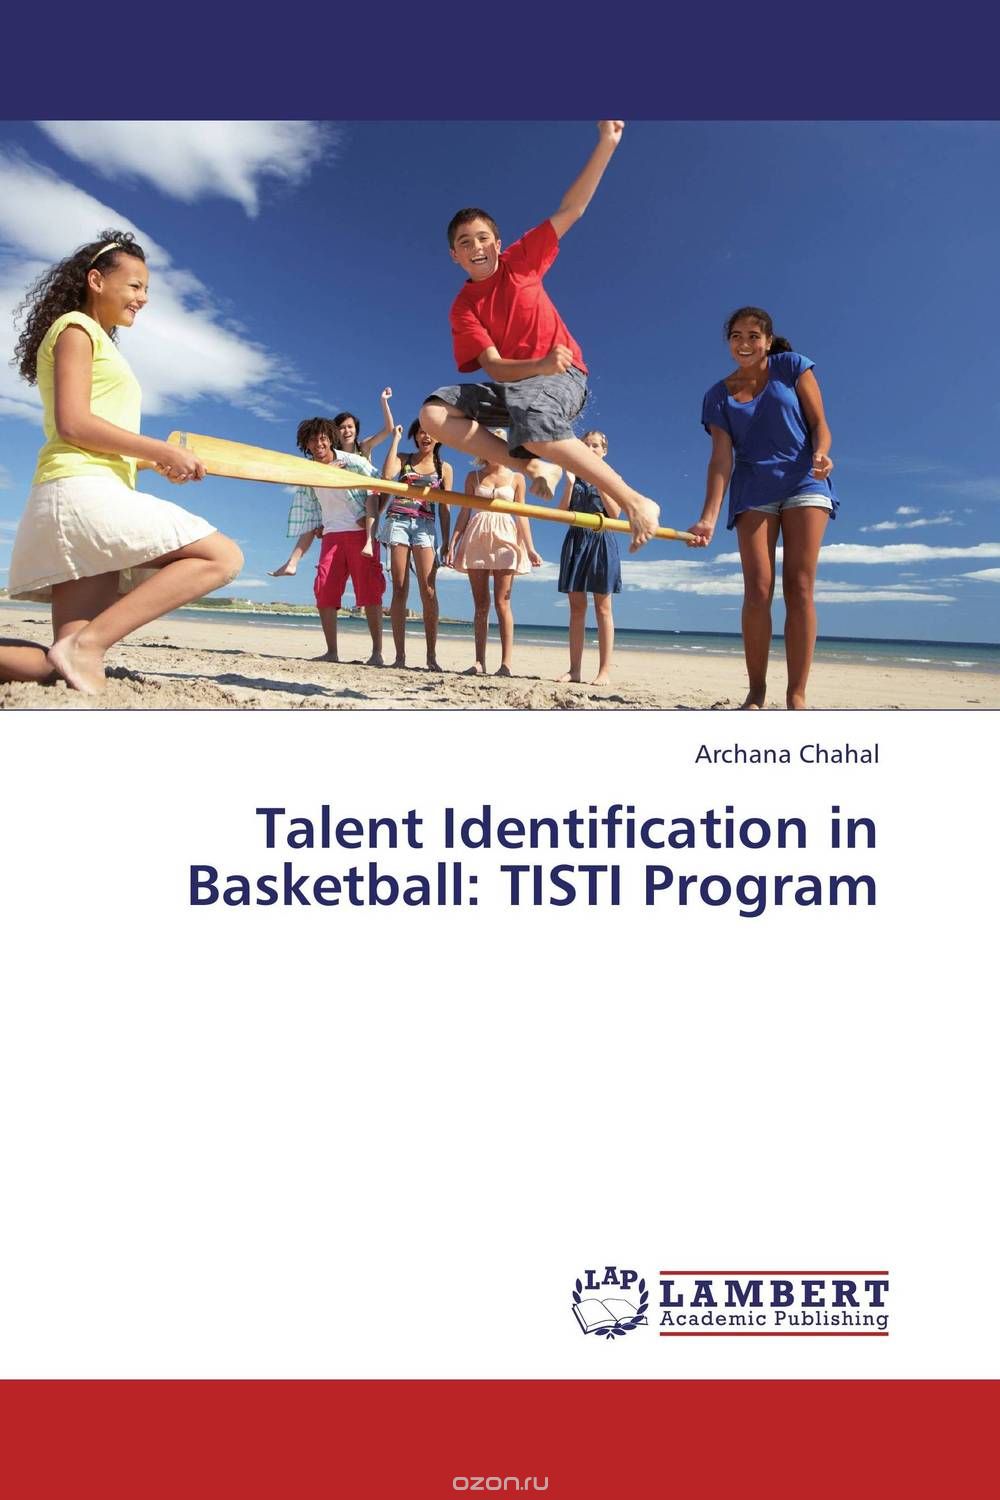 Скачать книгу "Talent Identification in Basketball: TISTI Program"